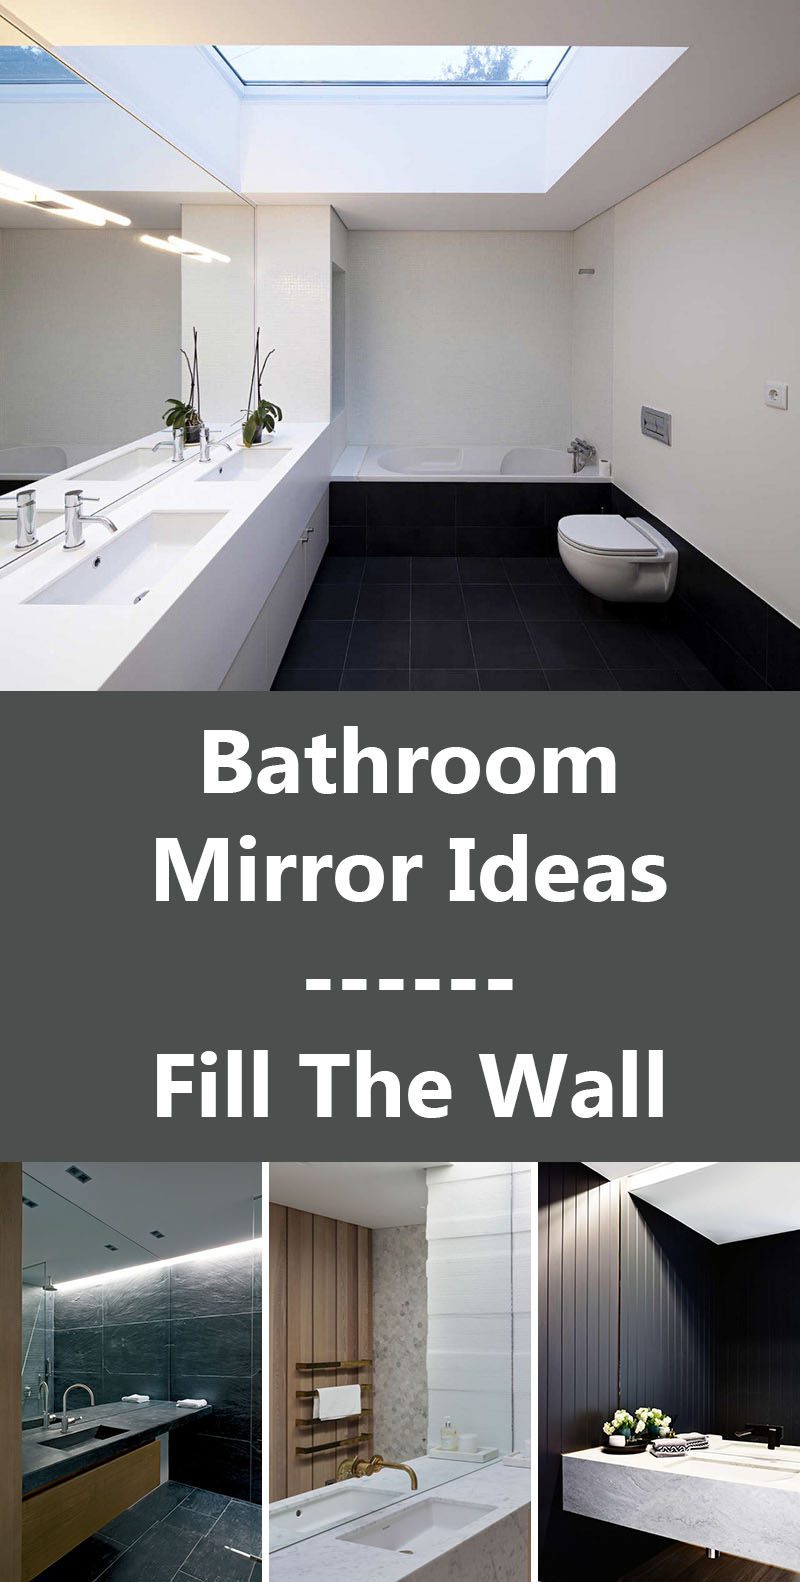 Bathroom Mirror Ideas - Fill The Wall